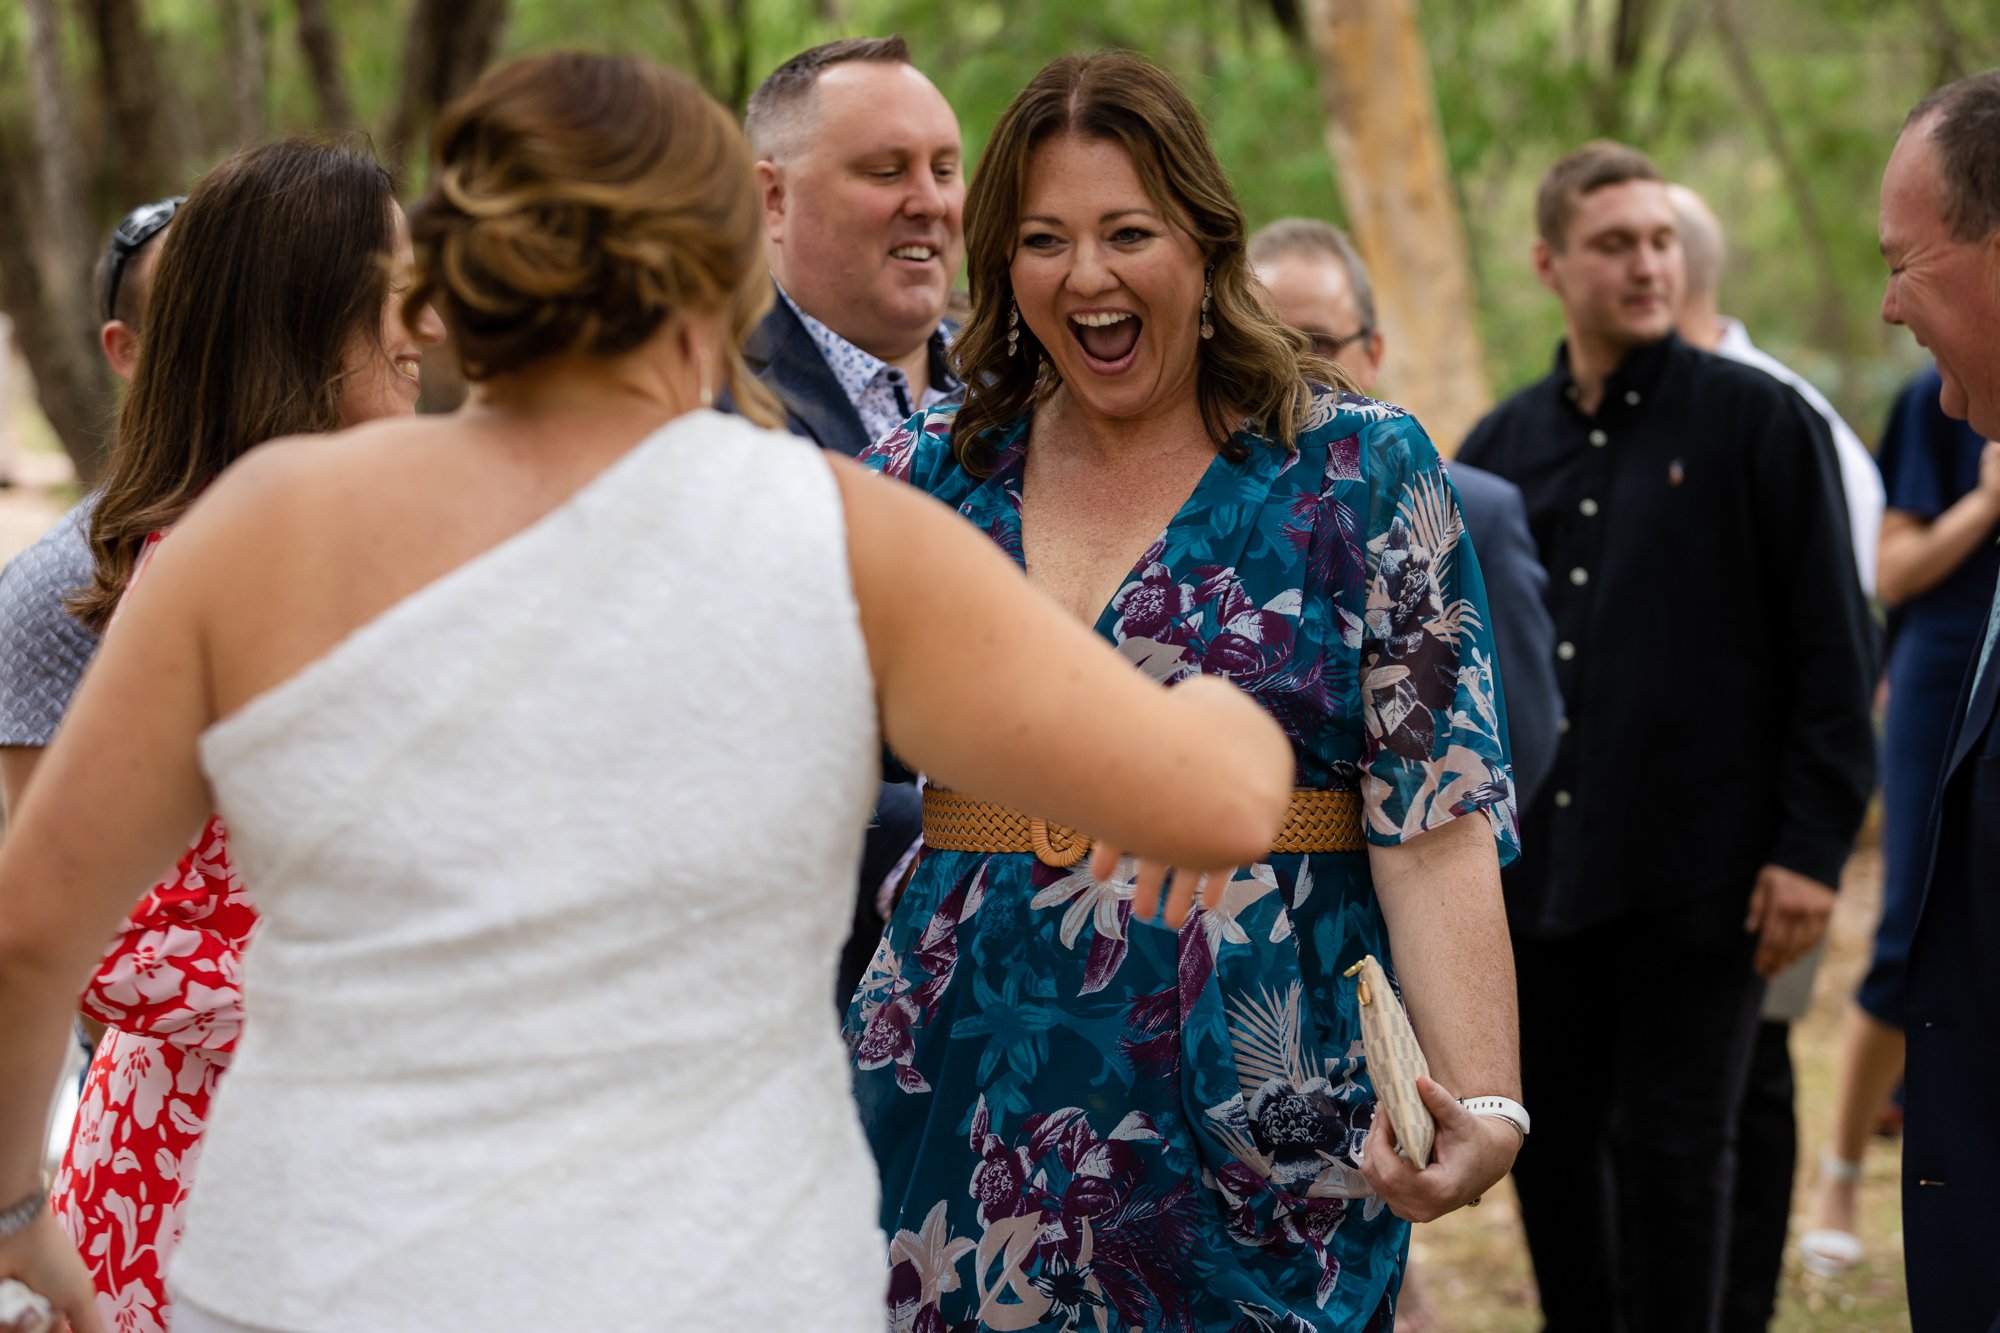 happy guests in a wedding